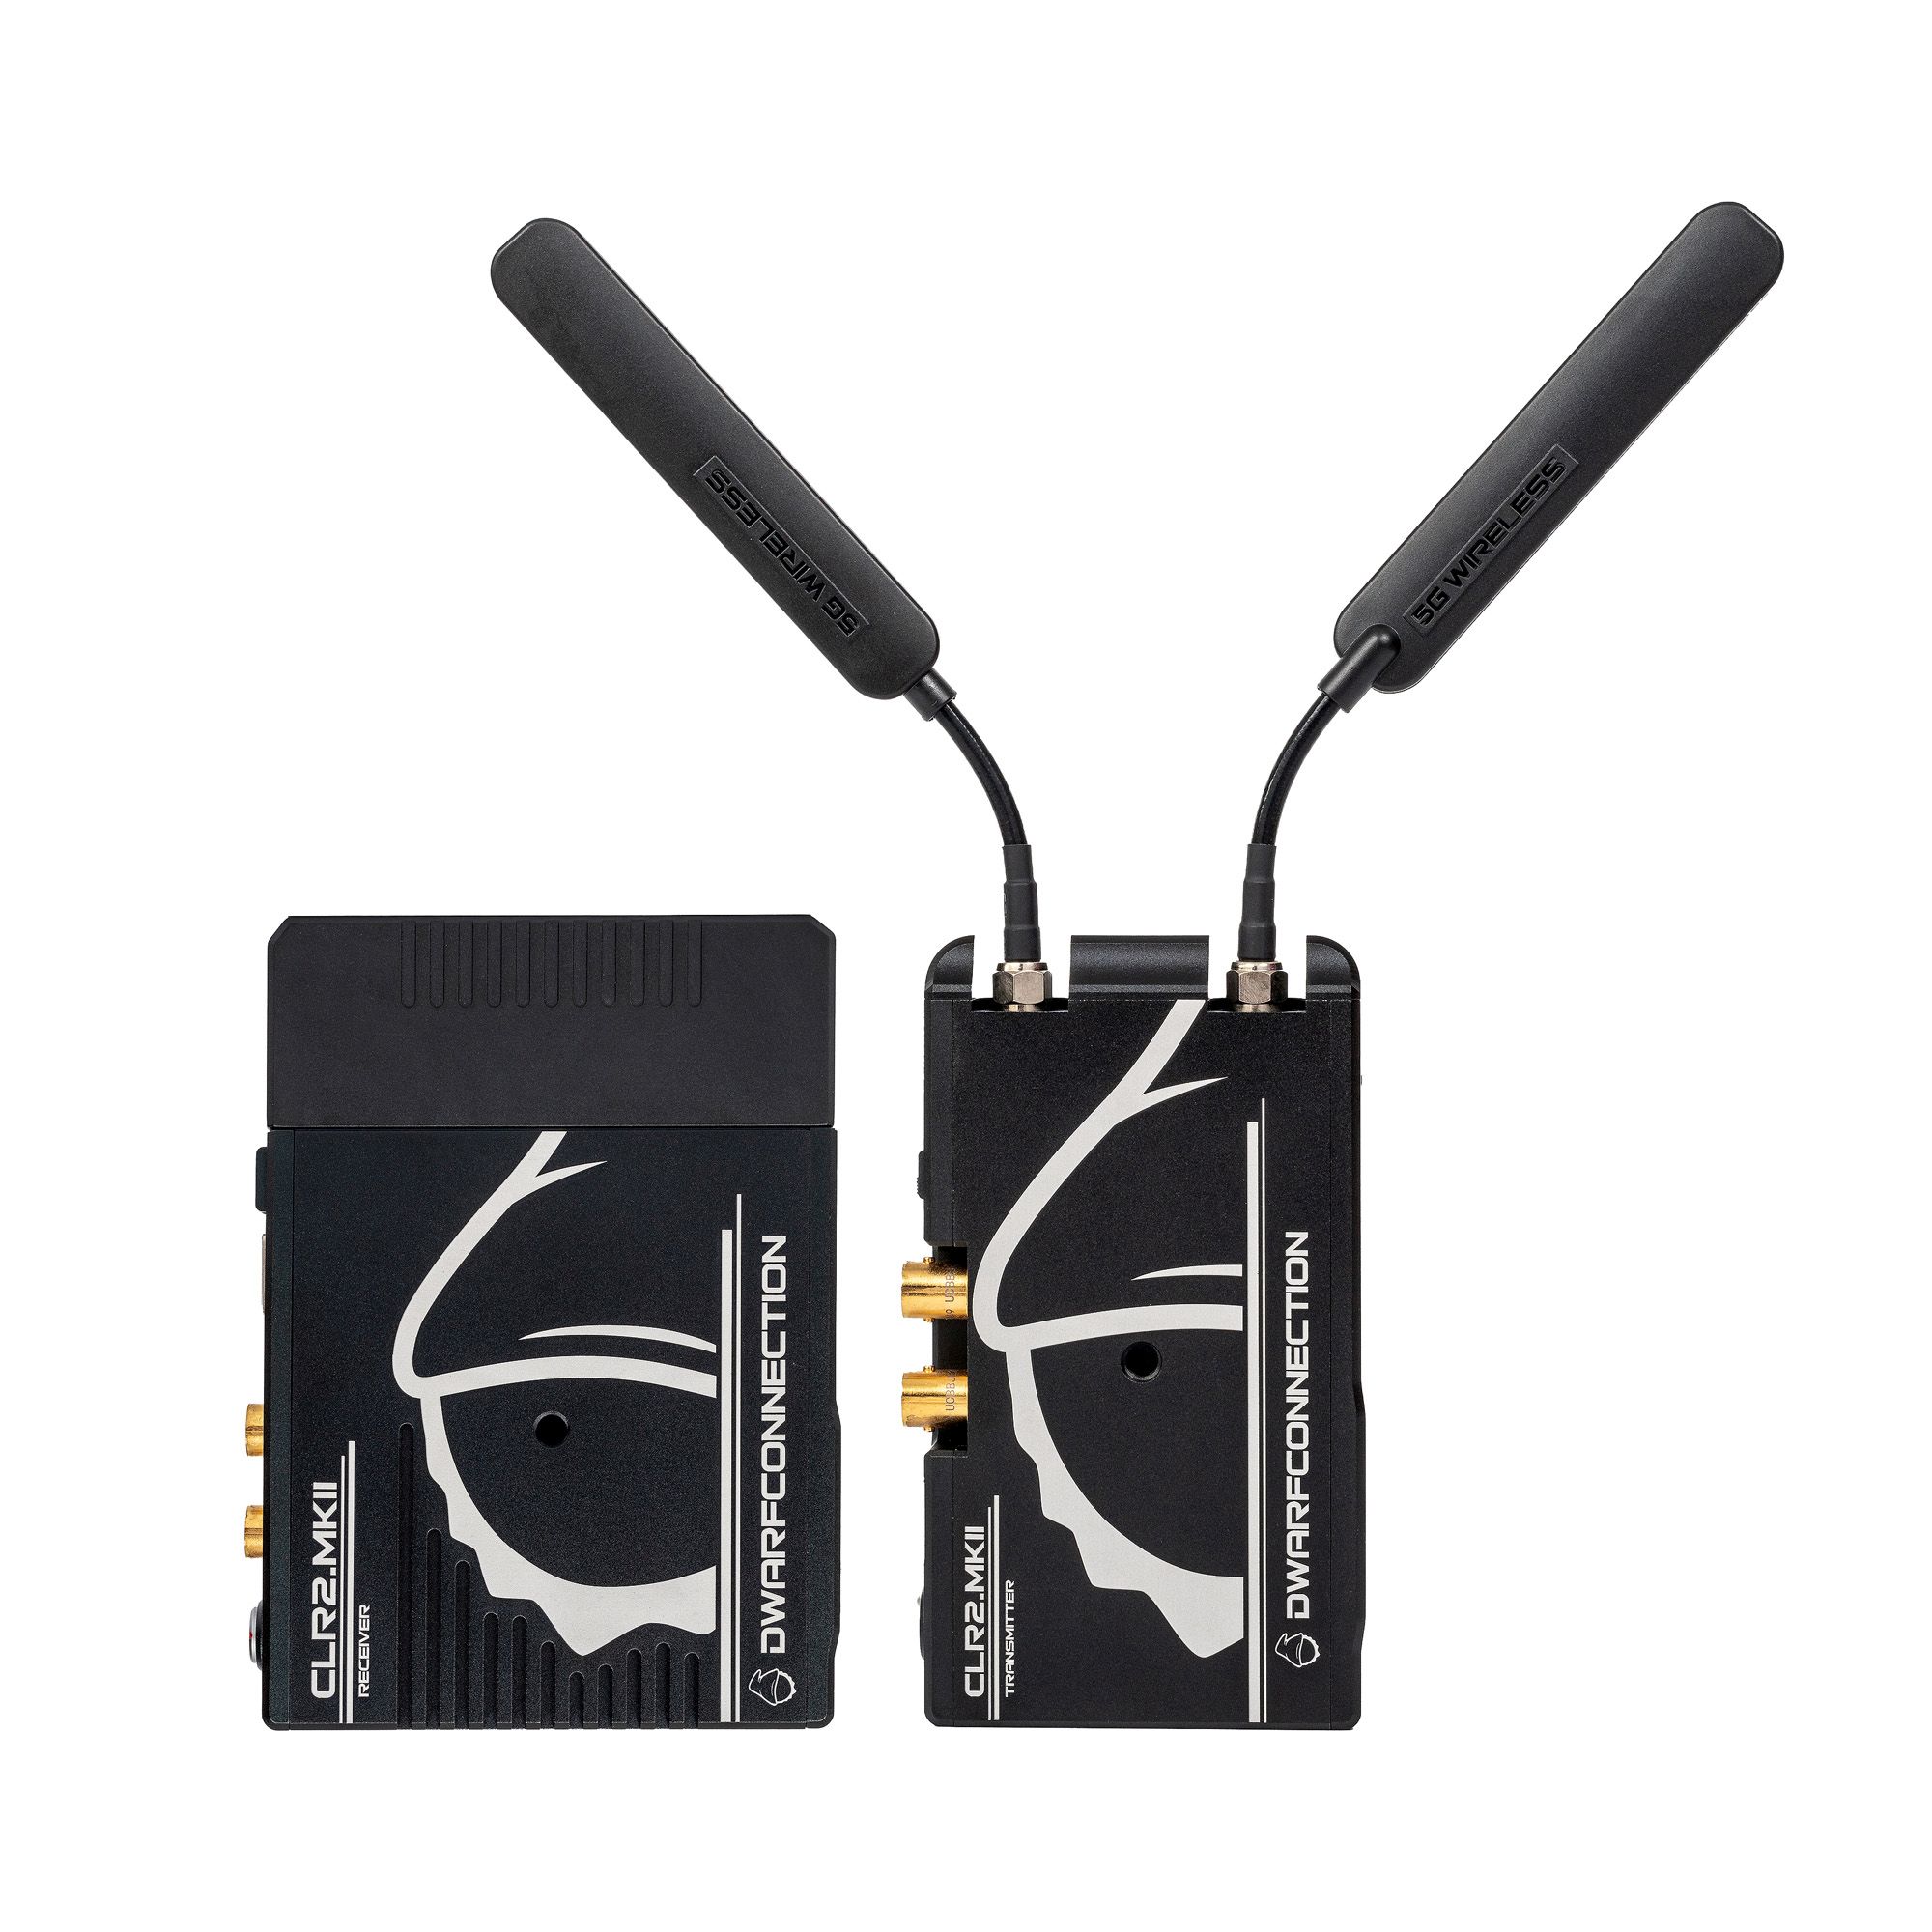 Dwarf Connection CLR2.MKII - TX/RX 300m LOS, NON-DFS, 3G-SDI/HDMI, indoor use only